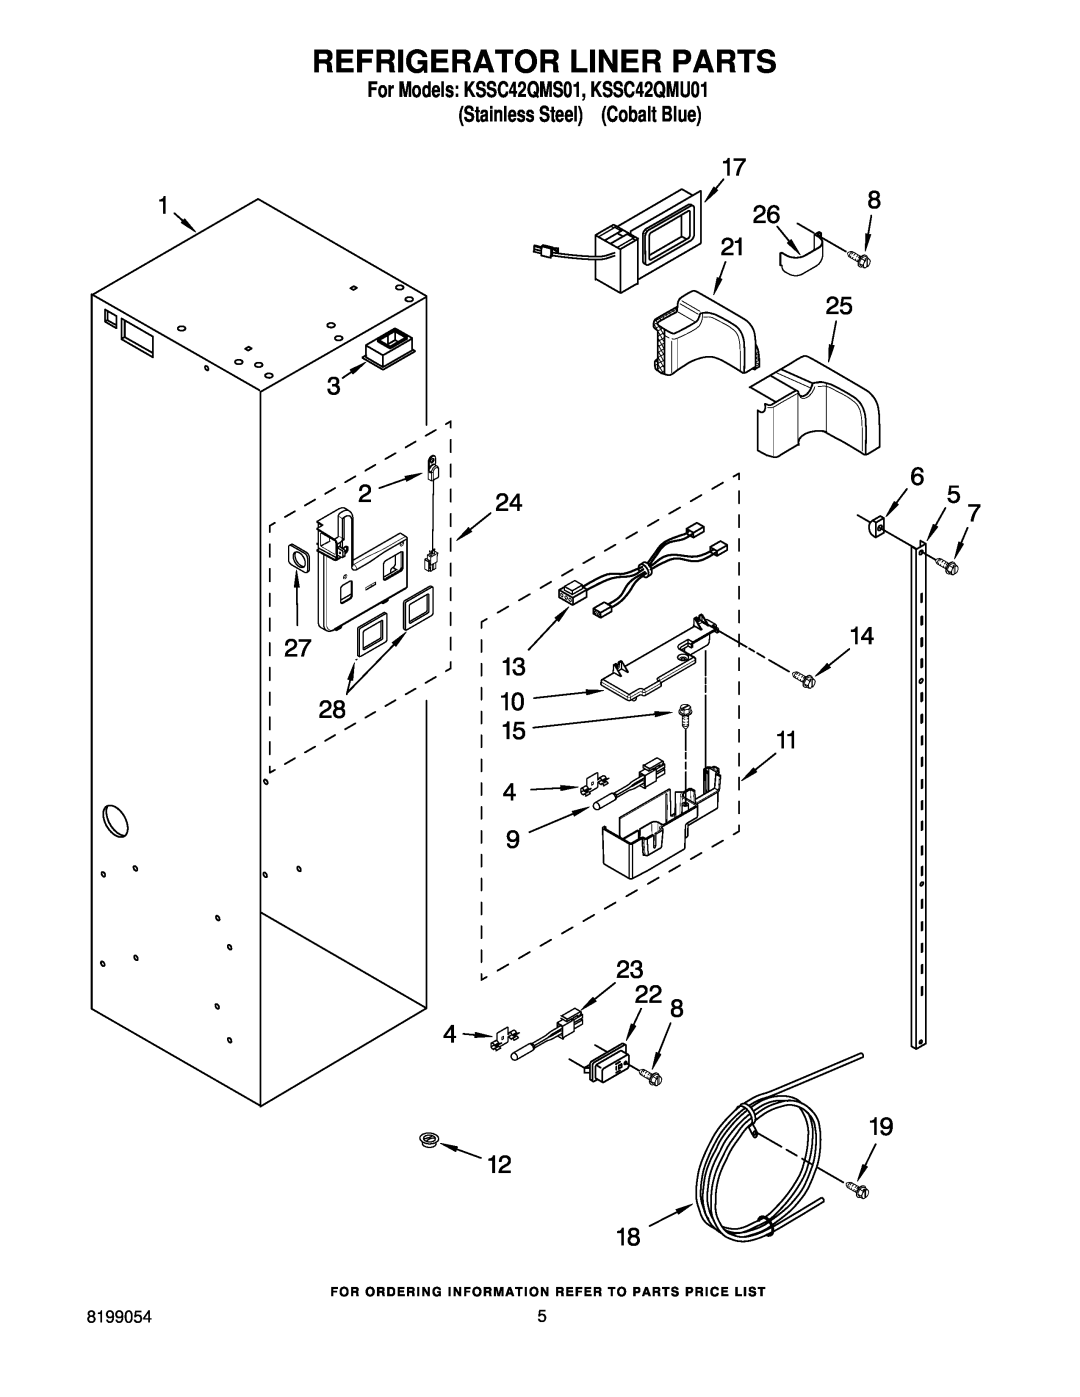 KitchenAid manual Refrigerator Liner Parts, For Models KSSC42QMS01, KSSC42QMU01 Stainless Steel Cobalt Blue 